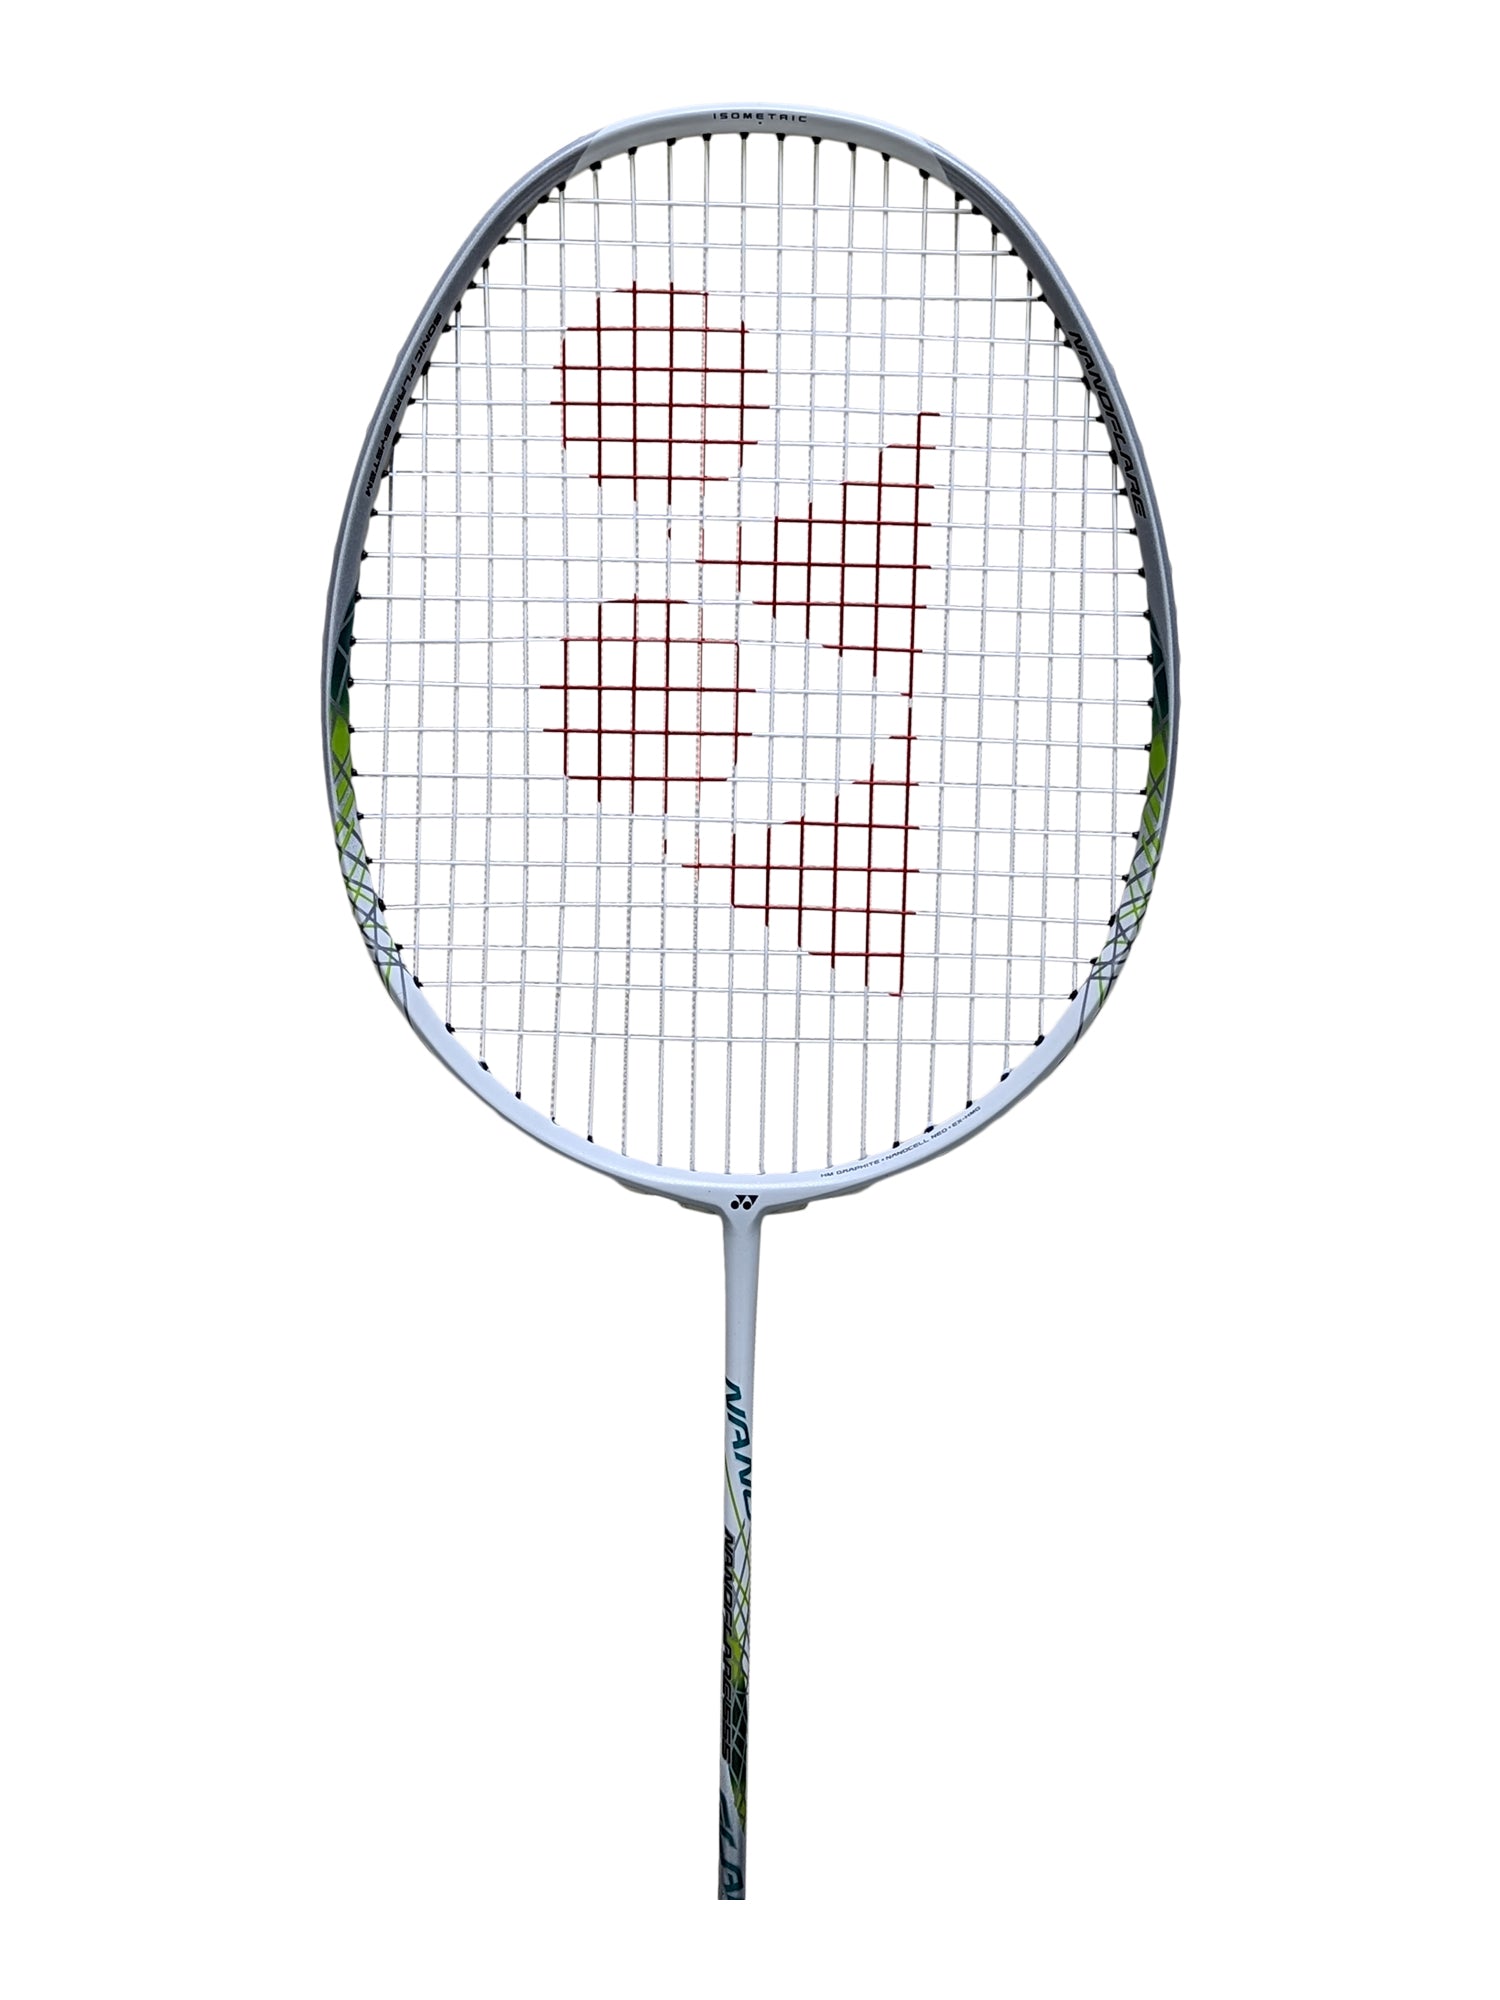 Yonex Nanoflare 555 Badminton Racket on sale at Badminton Warehouse!